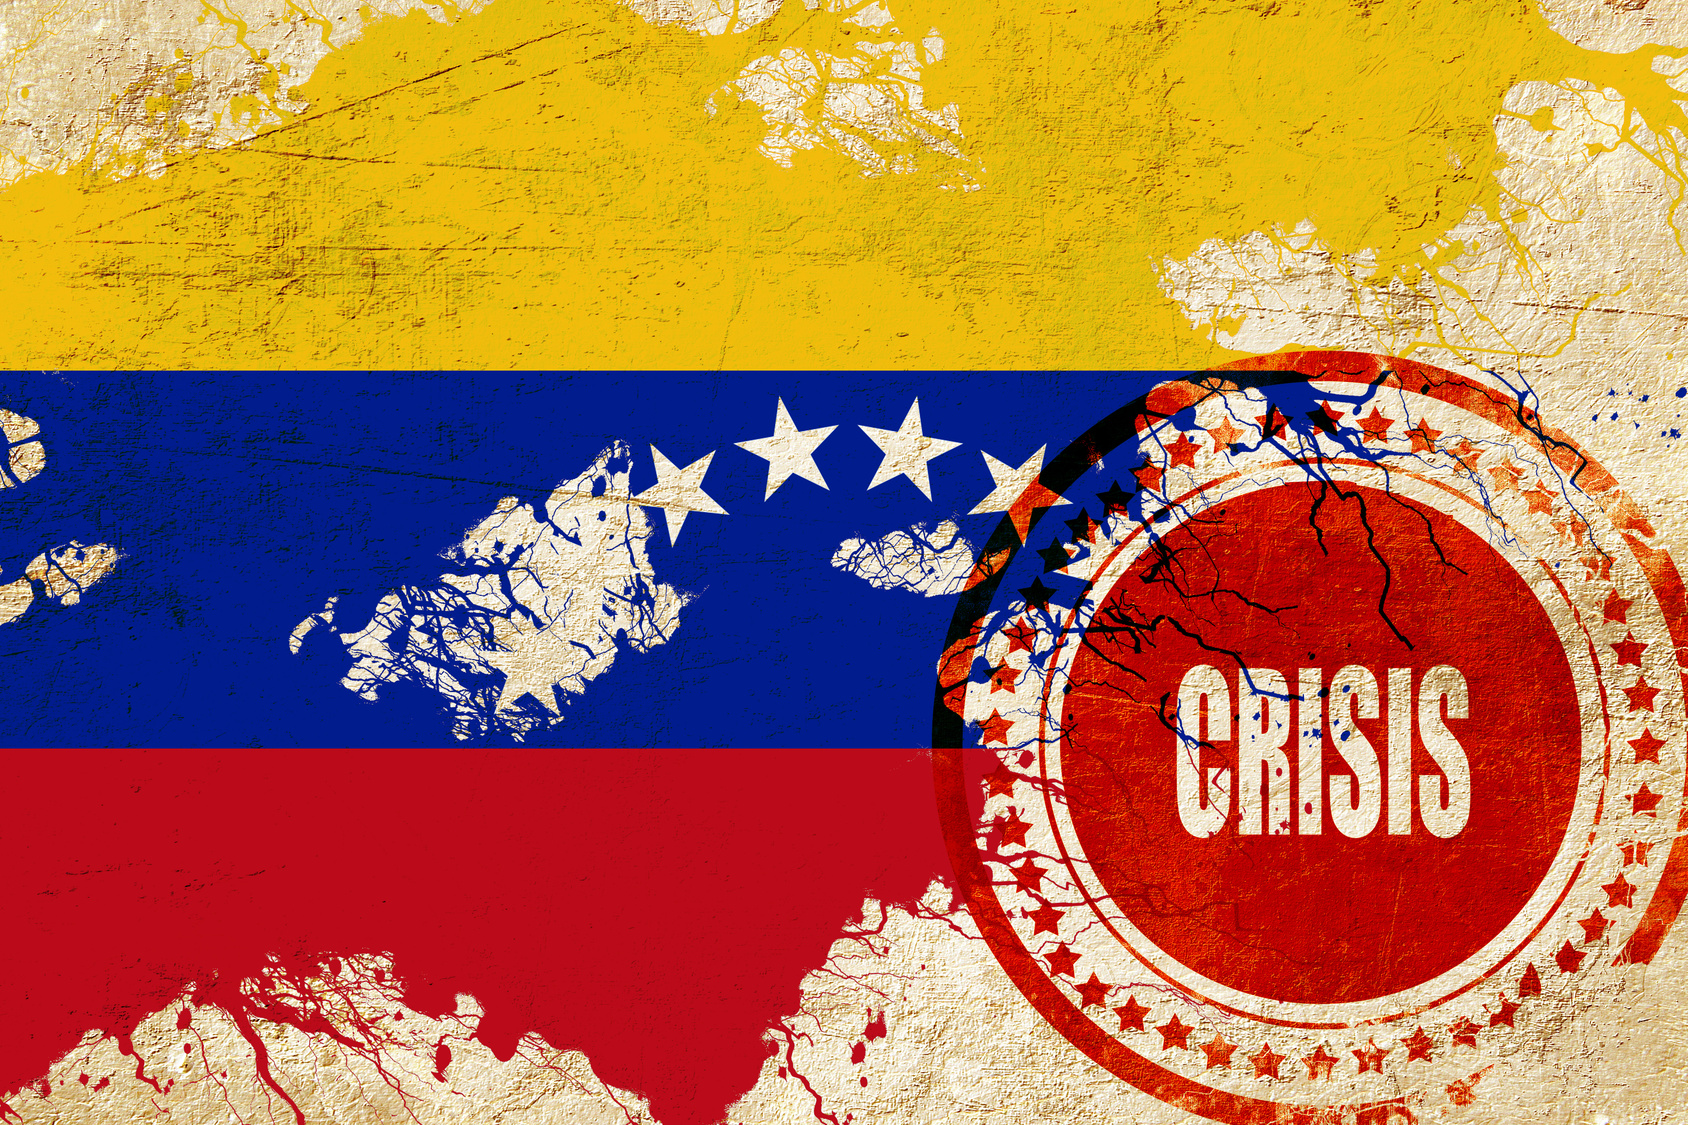 venezuela-ECONOMIC-CRISIS قصة أزمة إقتصاد فنزويلا وشبح انهيار الدولة واندلاع ثورة الجياع